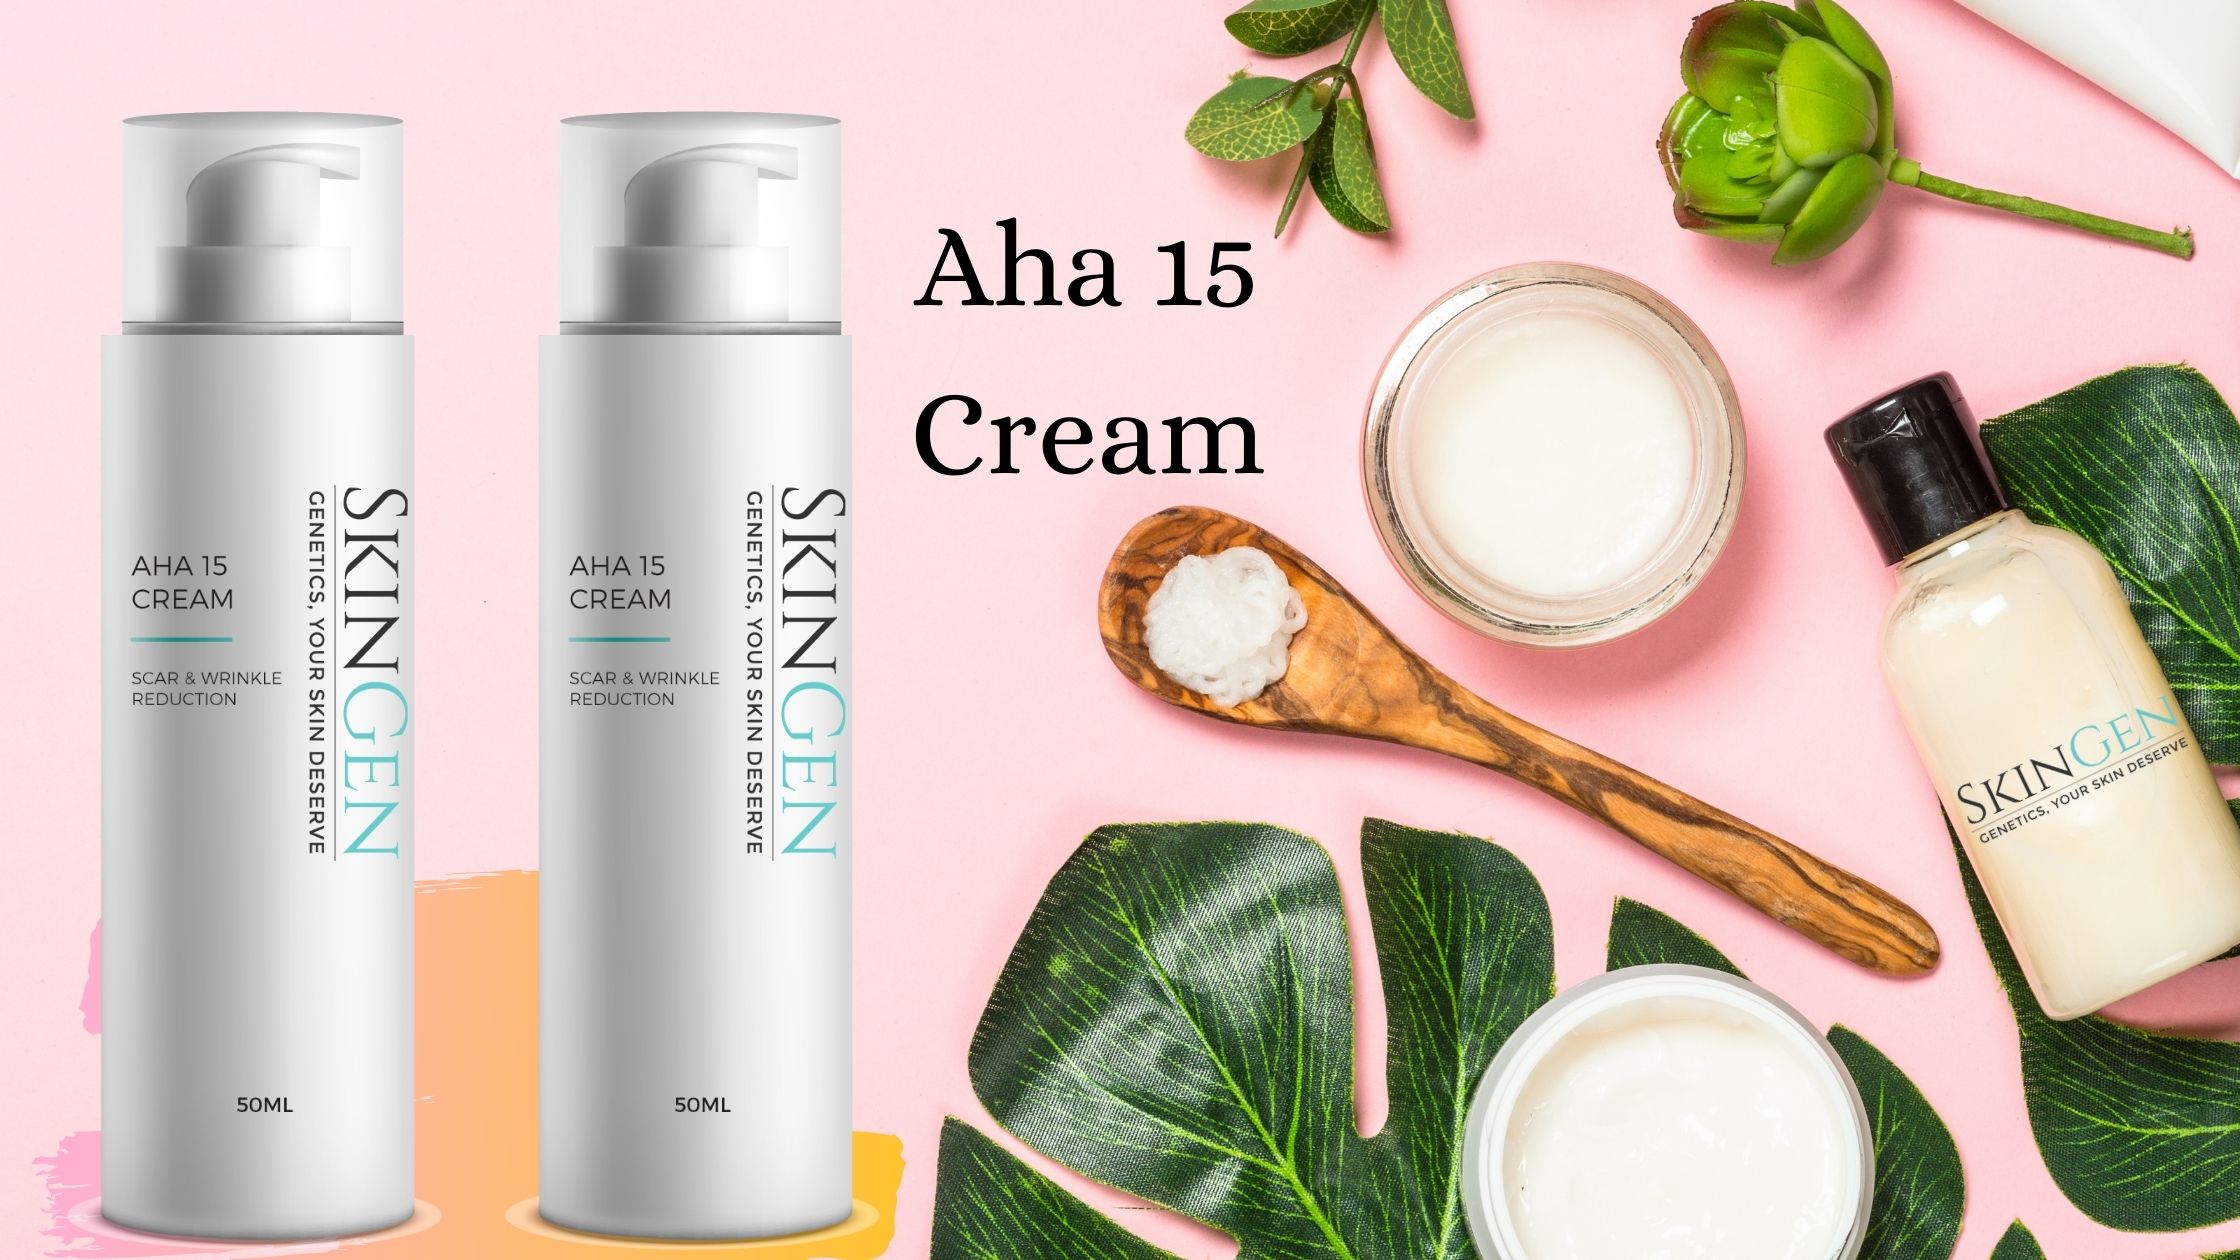 Maintain your Skin Health with Aha 15 Face Cream and Vitamin C Cream